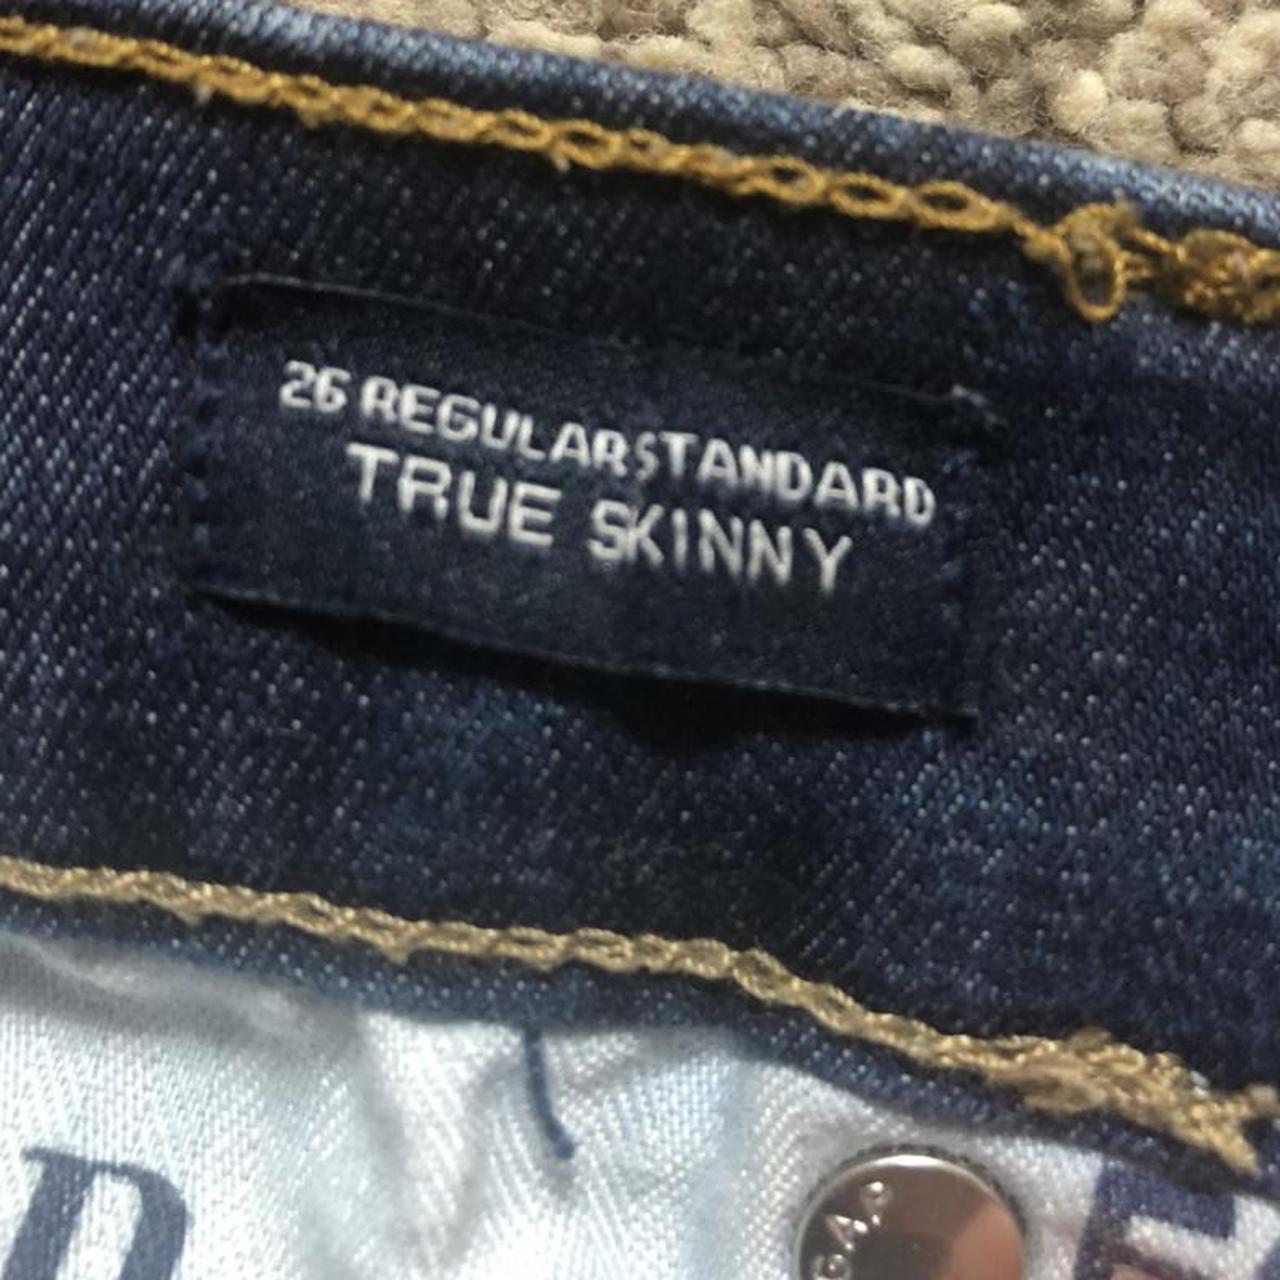 Product Image 2 - Women’s GAP denim jeans 
True